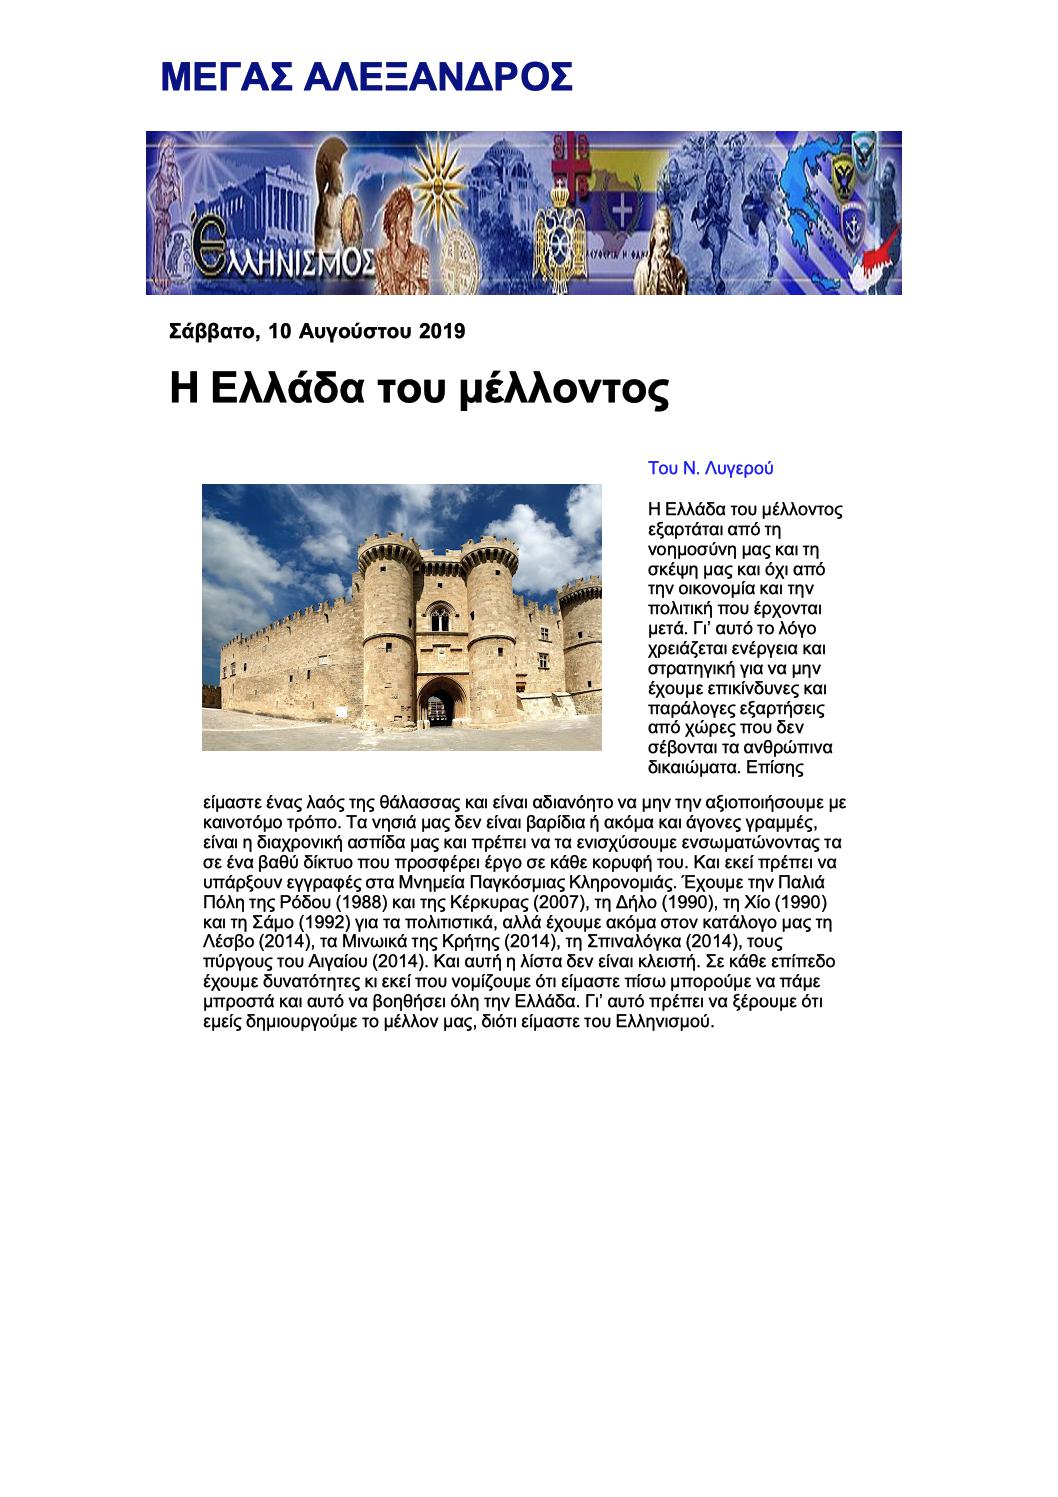 H Ελλάδα του μέλλοντος, alexander-hellas, 10/08/2019 - Publication